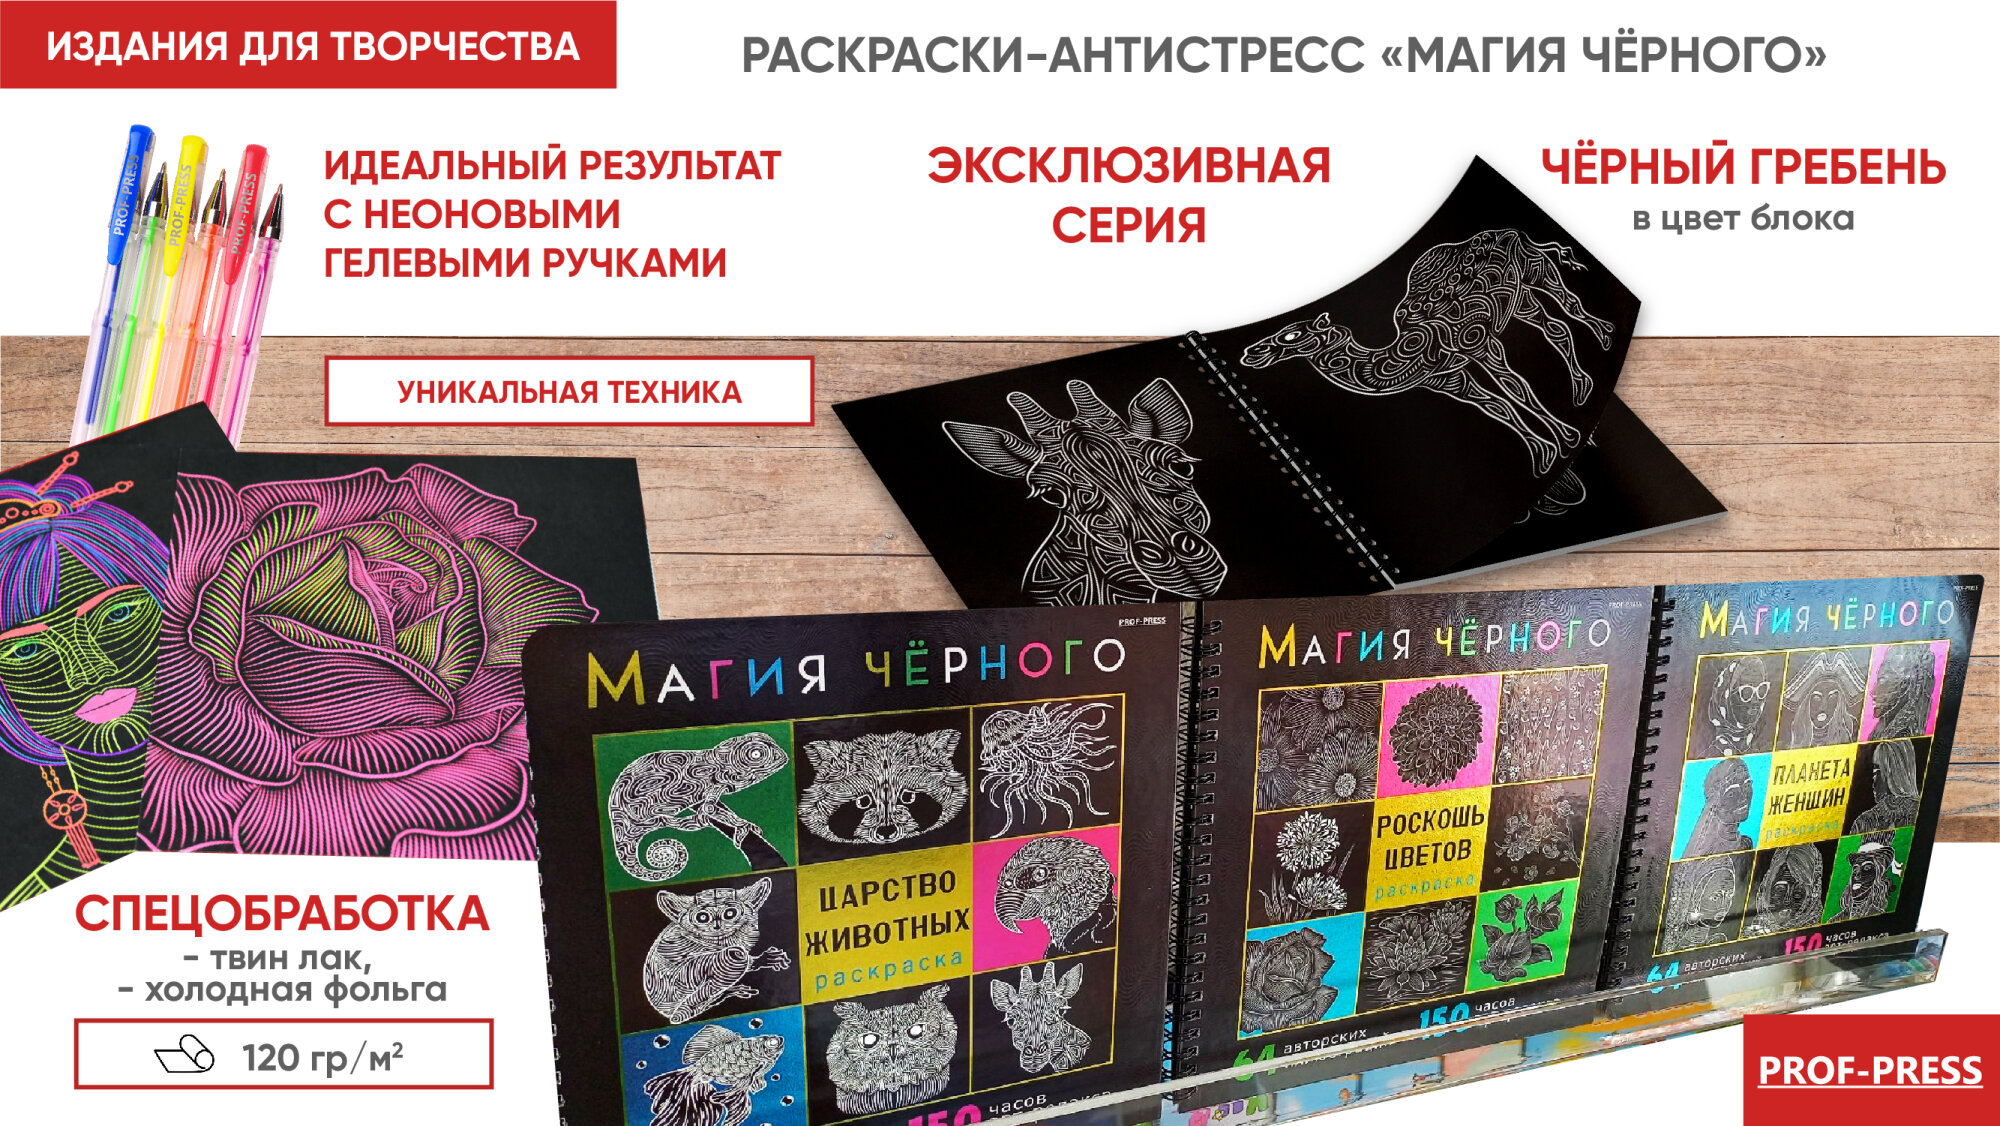 Раскраски антистресс купить в Минске, цена раскраски дудлинг и книги раскраски антистресс